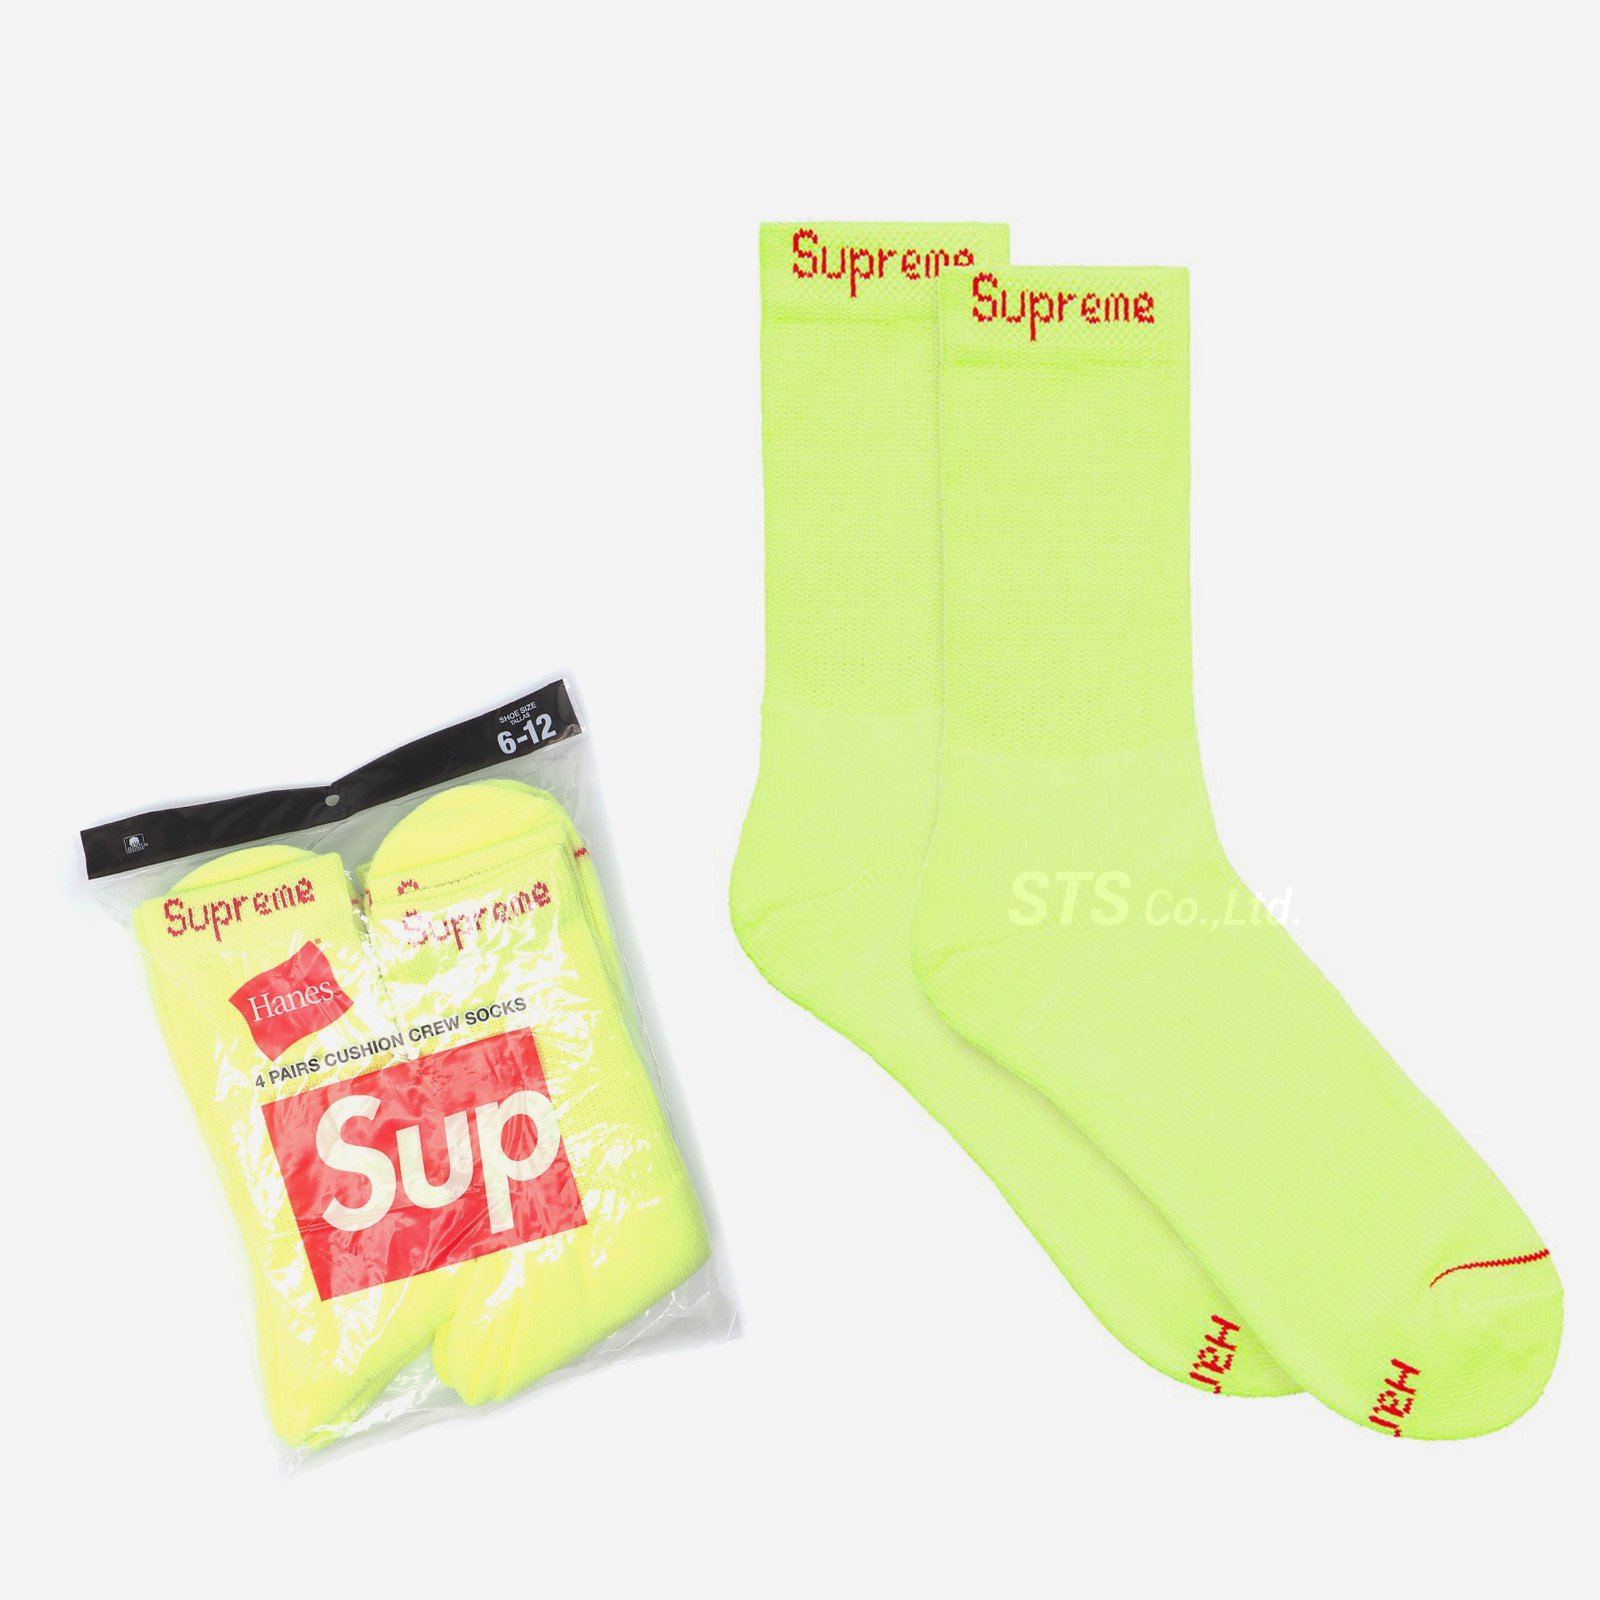 Supreme/Hanes Crew Socks (4 pack) - Fluorescent Yellow - UG.SHAFT